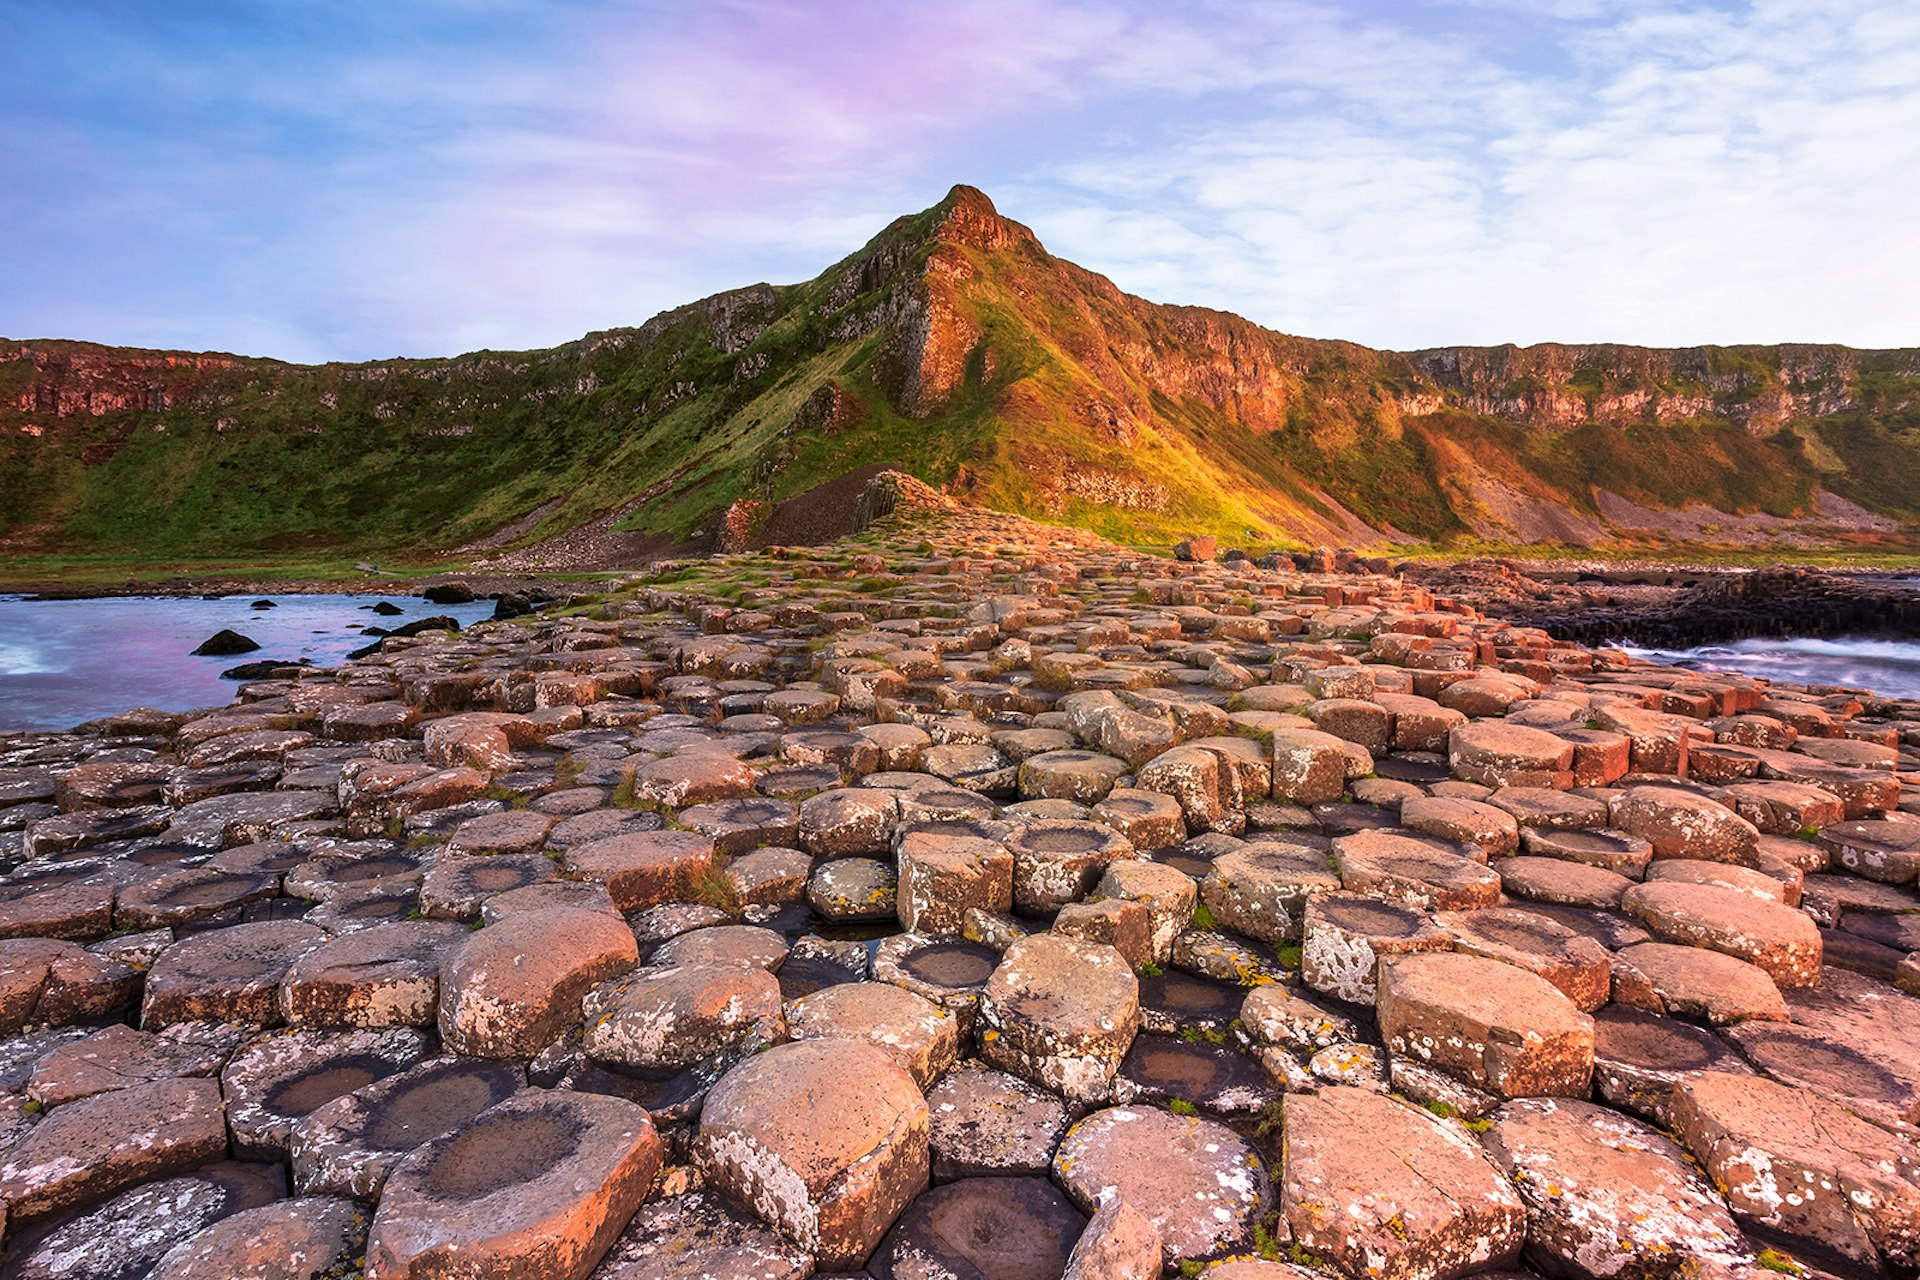 Northern Ireland's spectacular Giant's Causeway © Joe Daniel Price / Getty Images